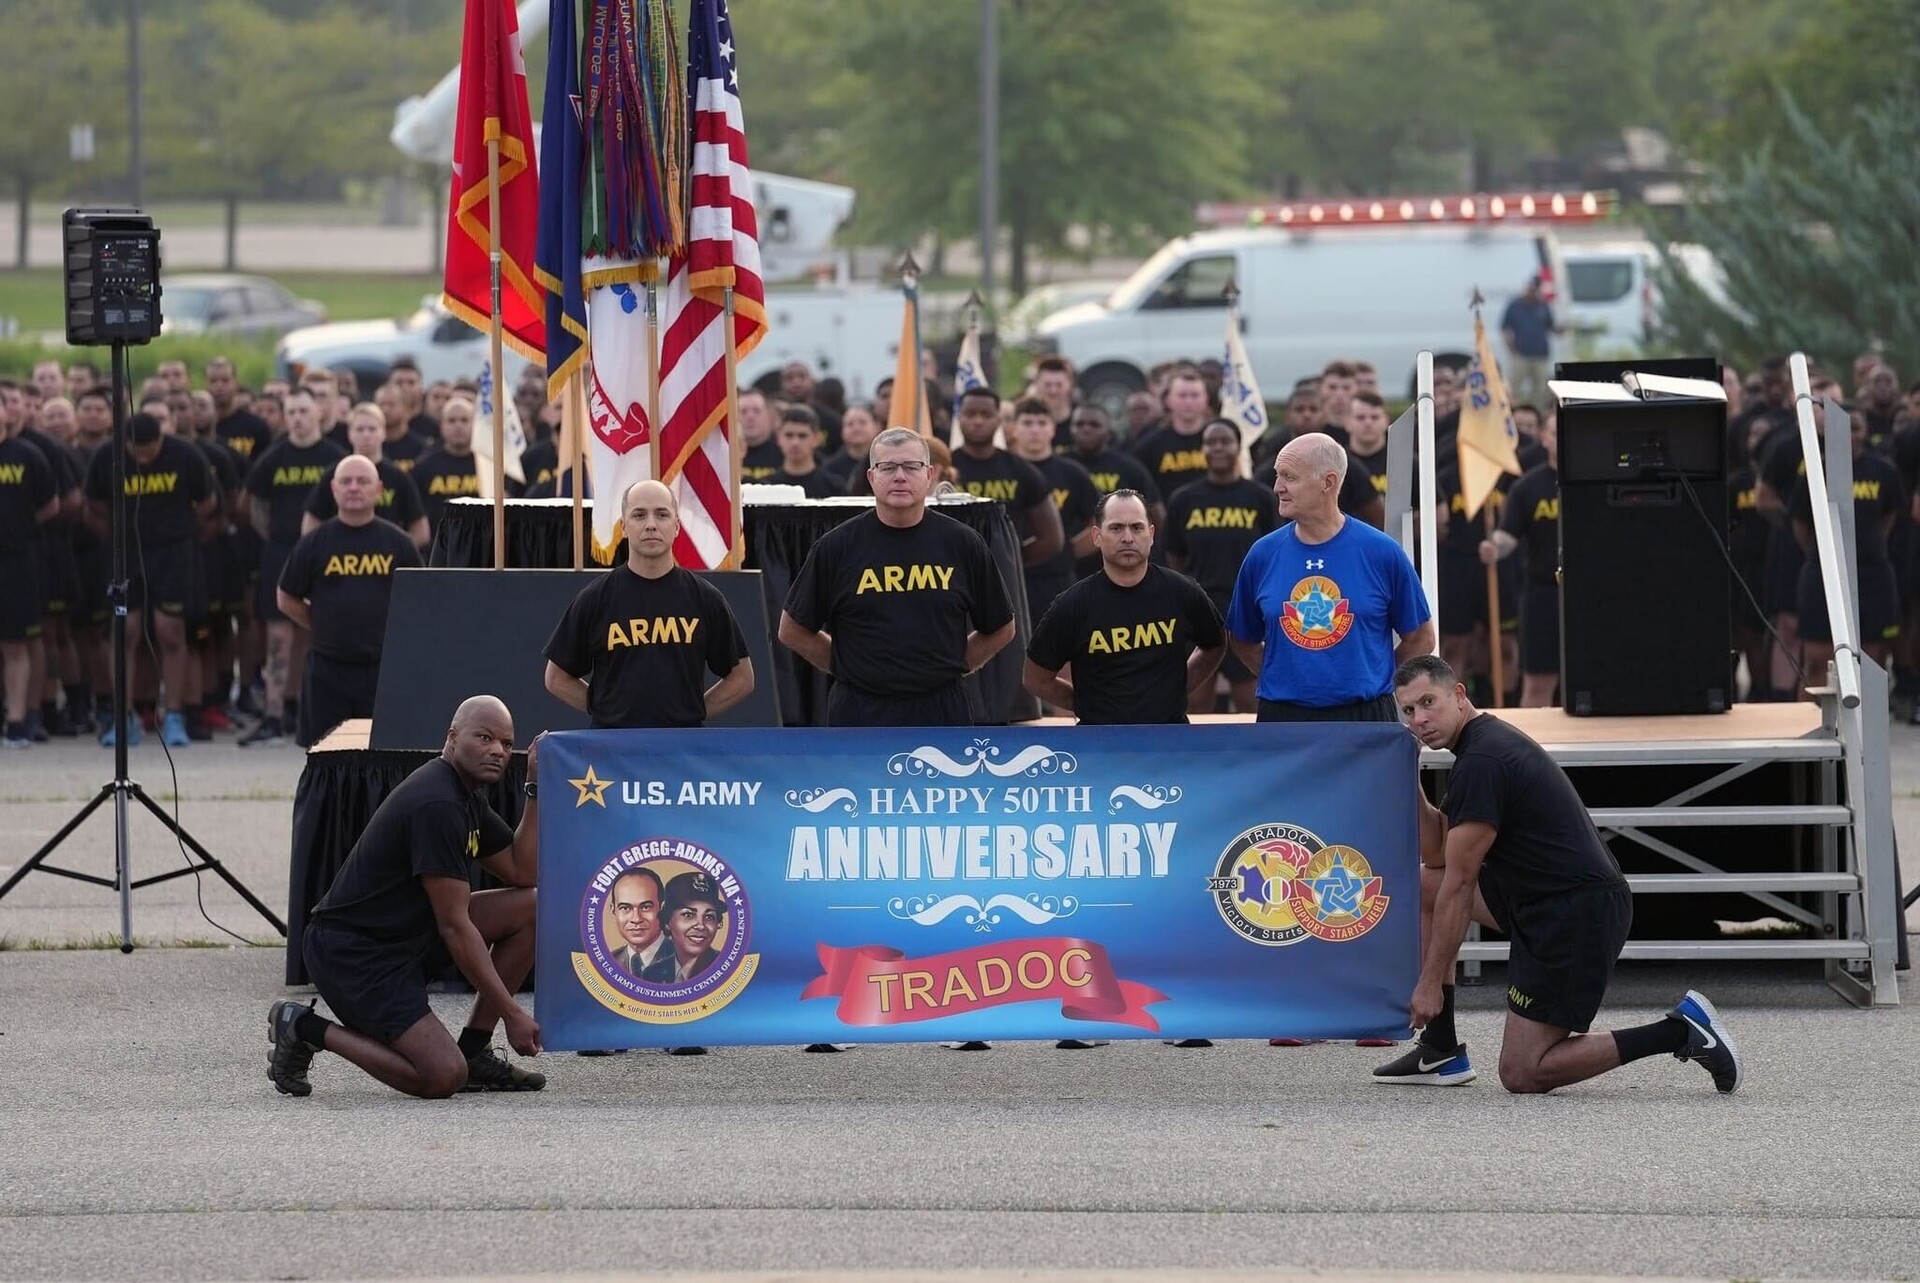 50th Anniversary for TRADOC - US Army